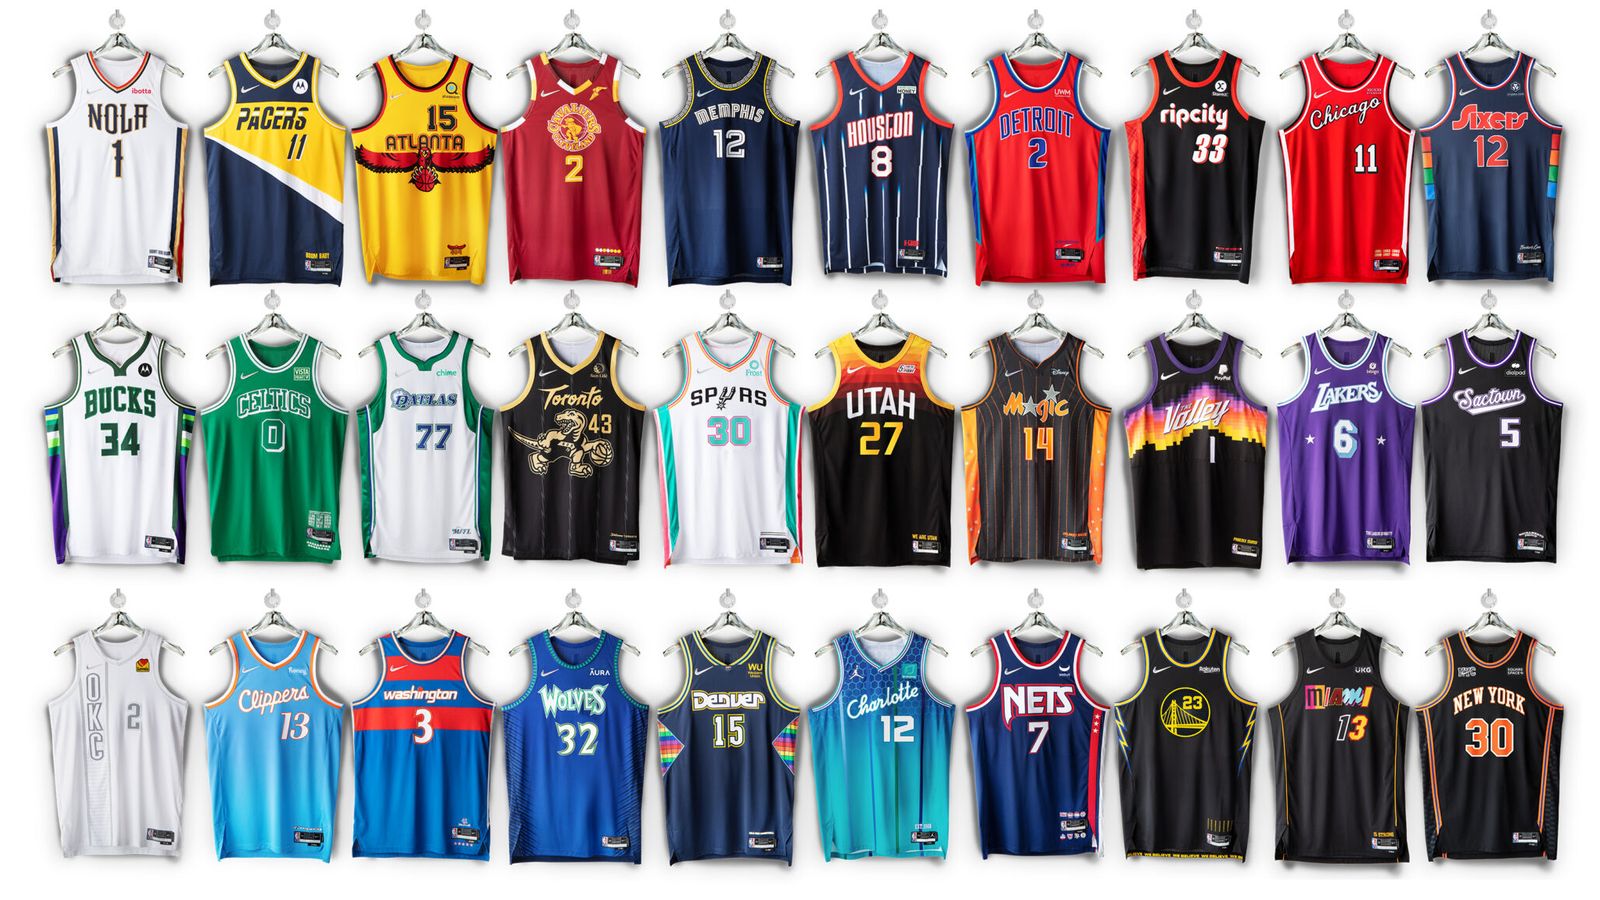 Ranking this season's NBA City Edition uniforms from No. 30 to No. 1